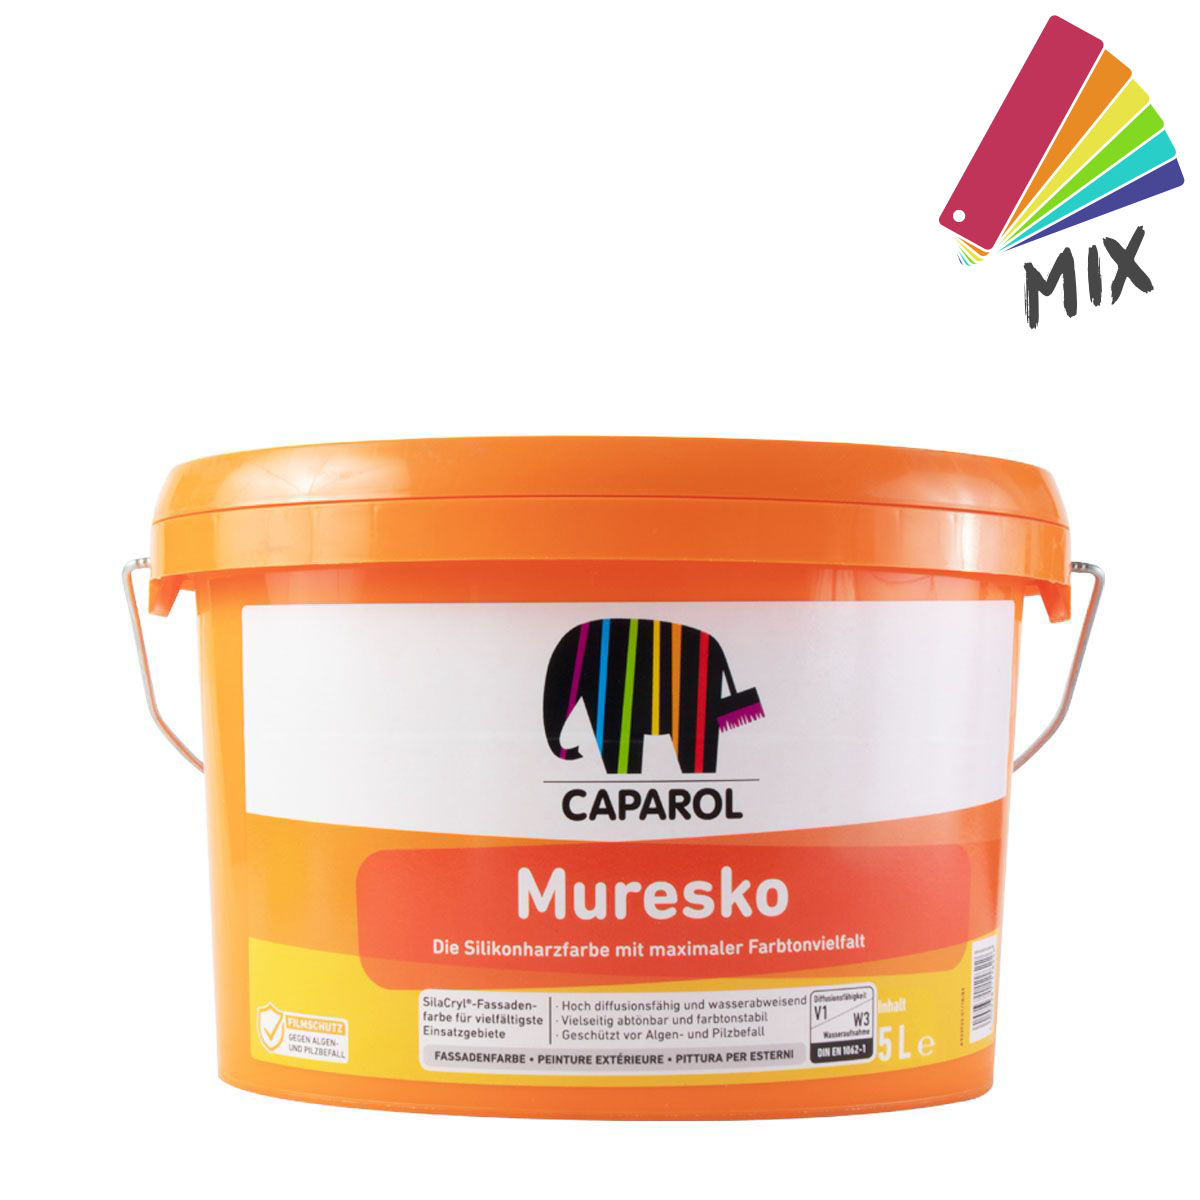 Caparol Muresko SilaCryl Fassadenfarbe 5L wunschfarbton PG A, Reinacrylat-Fassadenfarbe